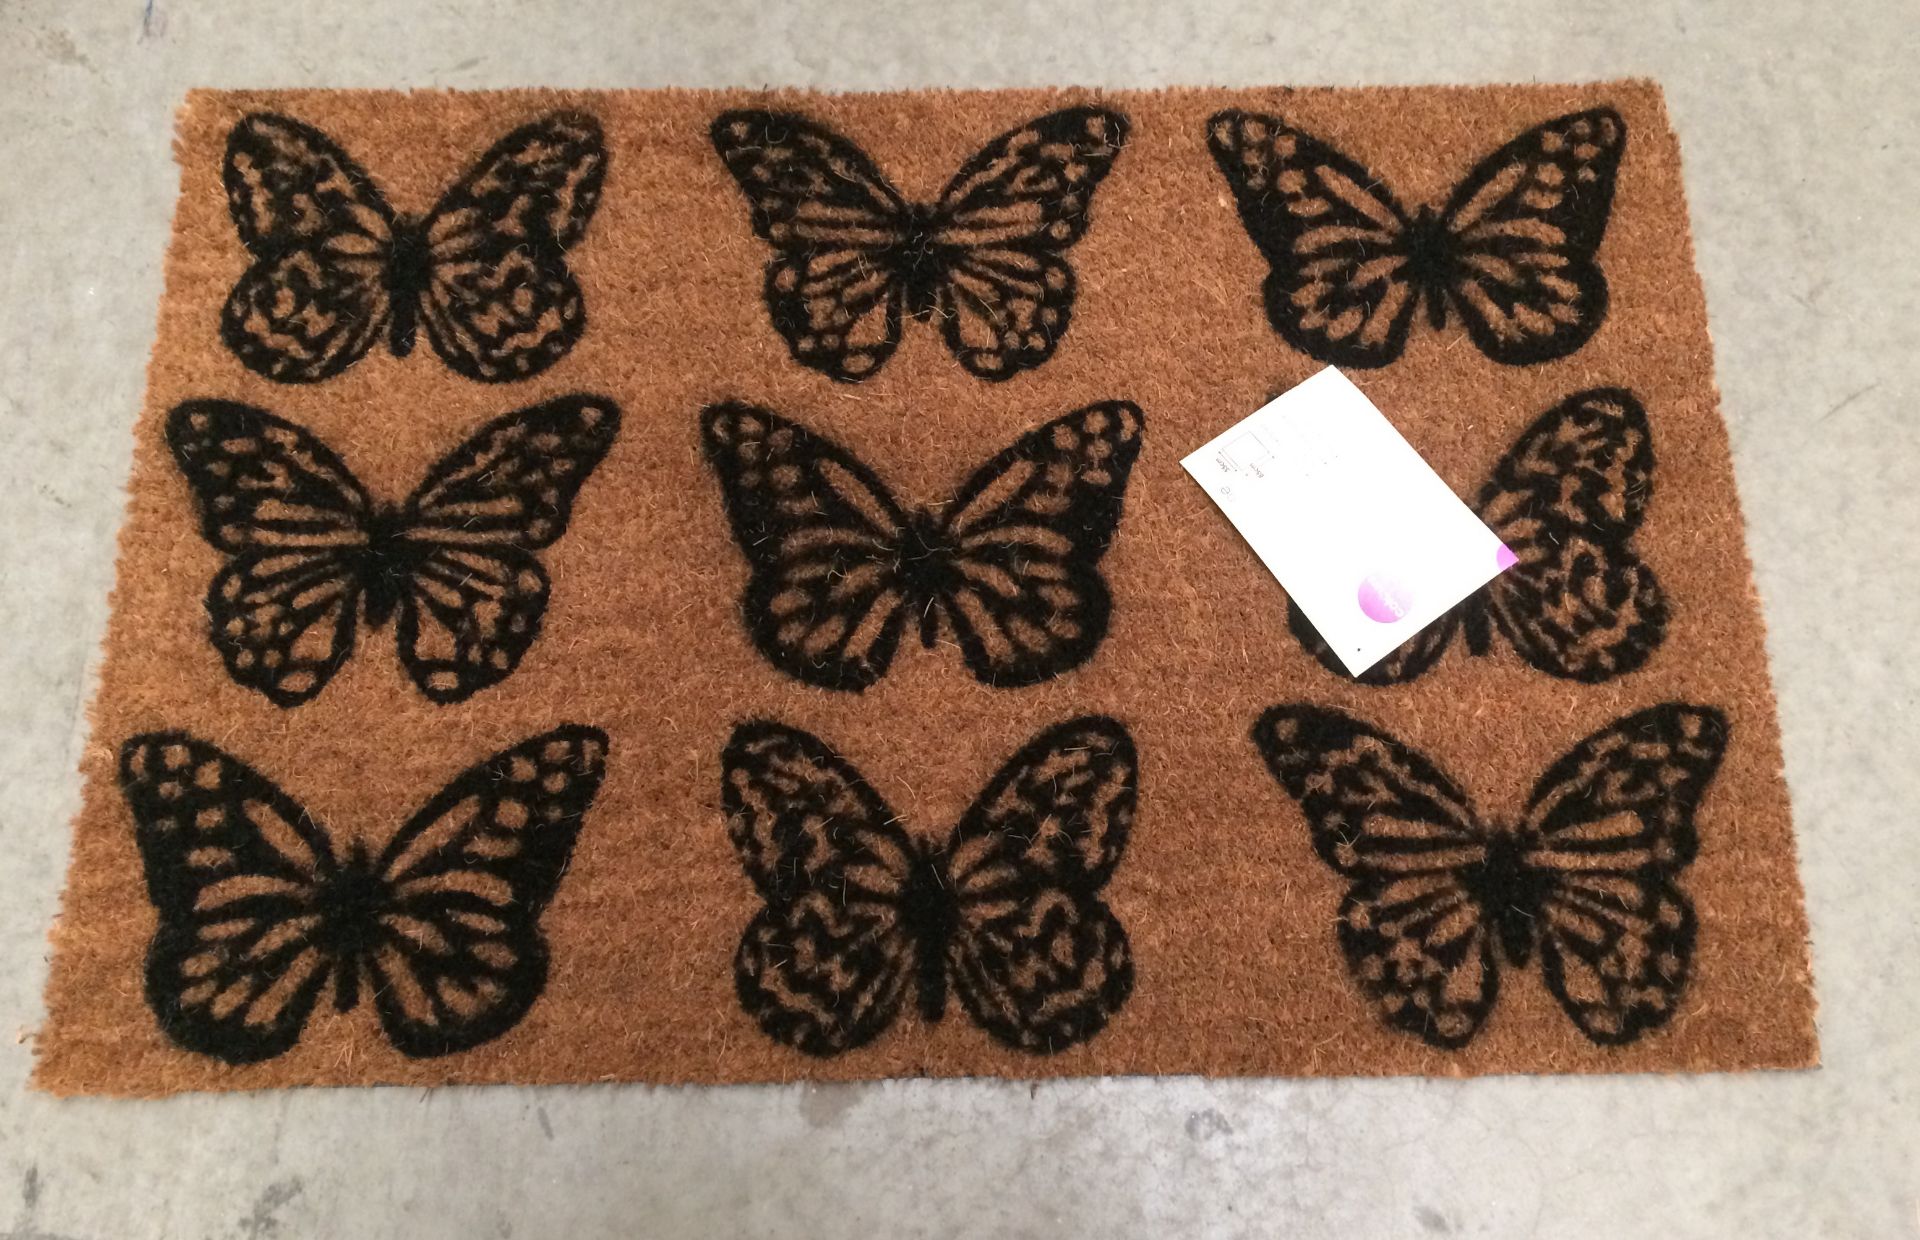 5 x Yasmine natural coir butterfly print doormats 55 x 85cm